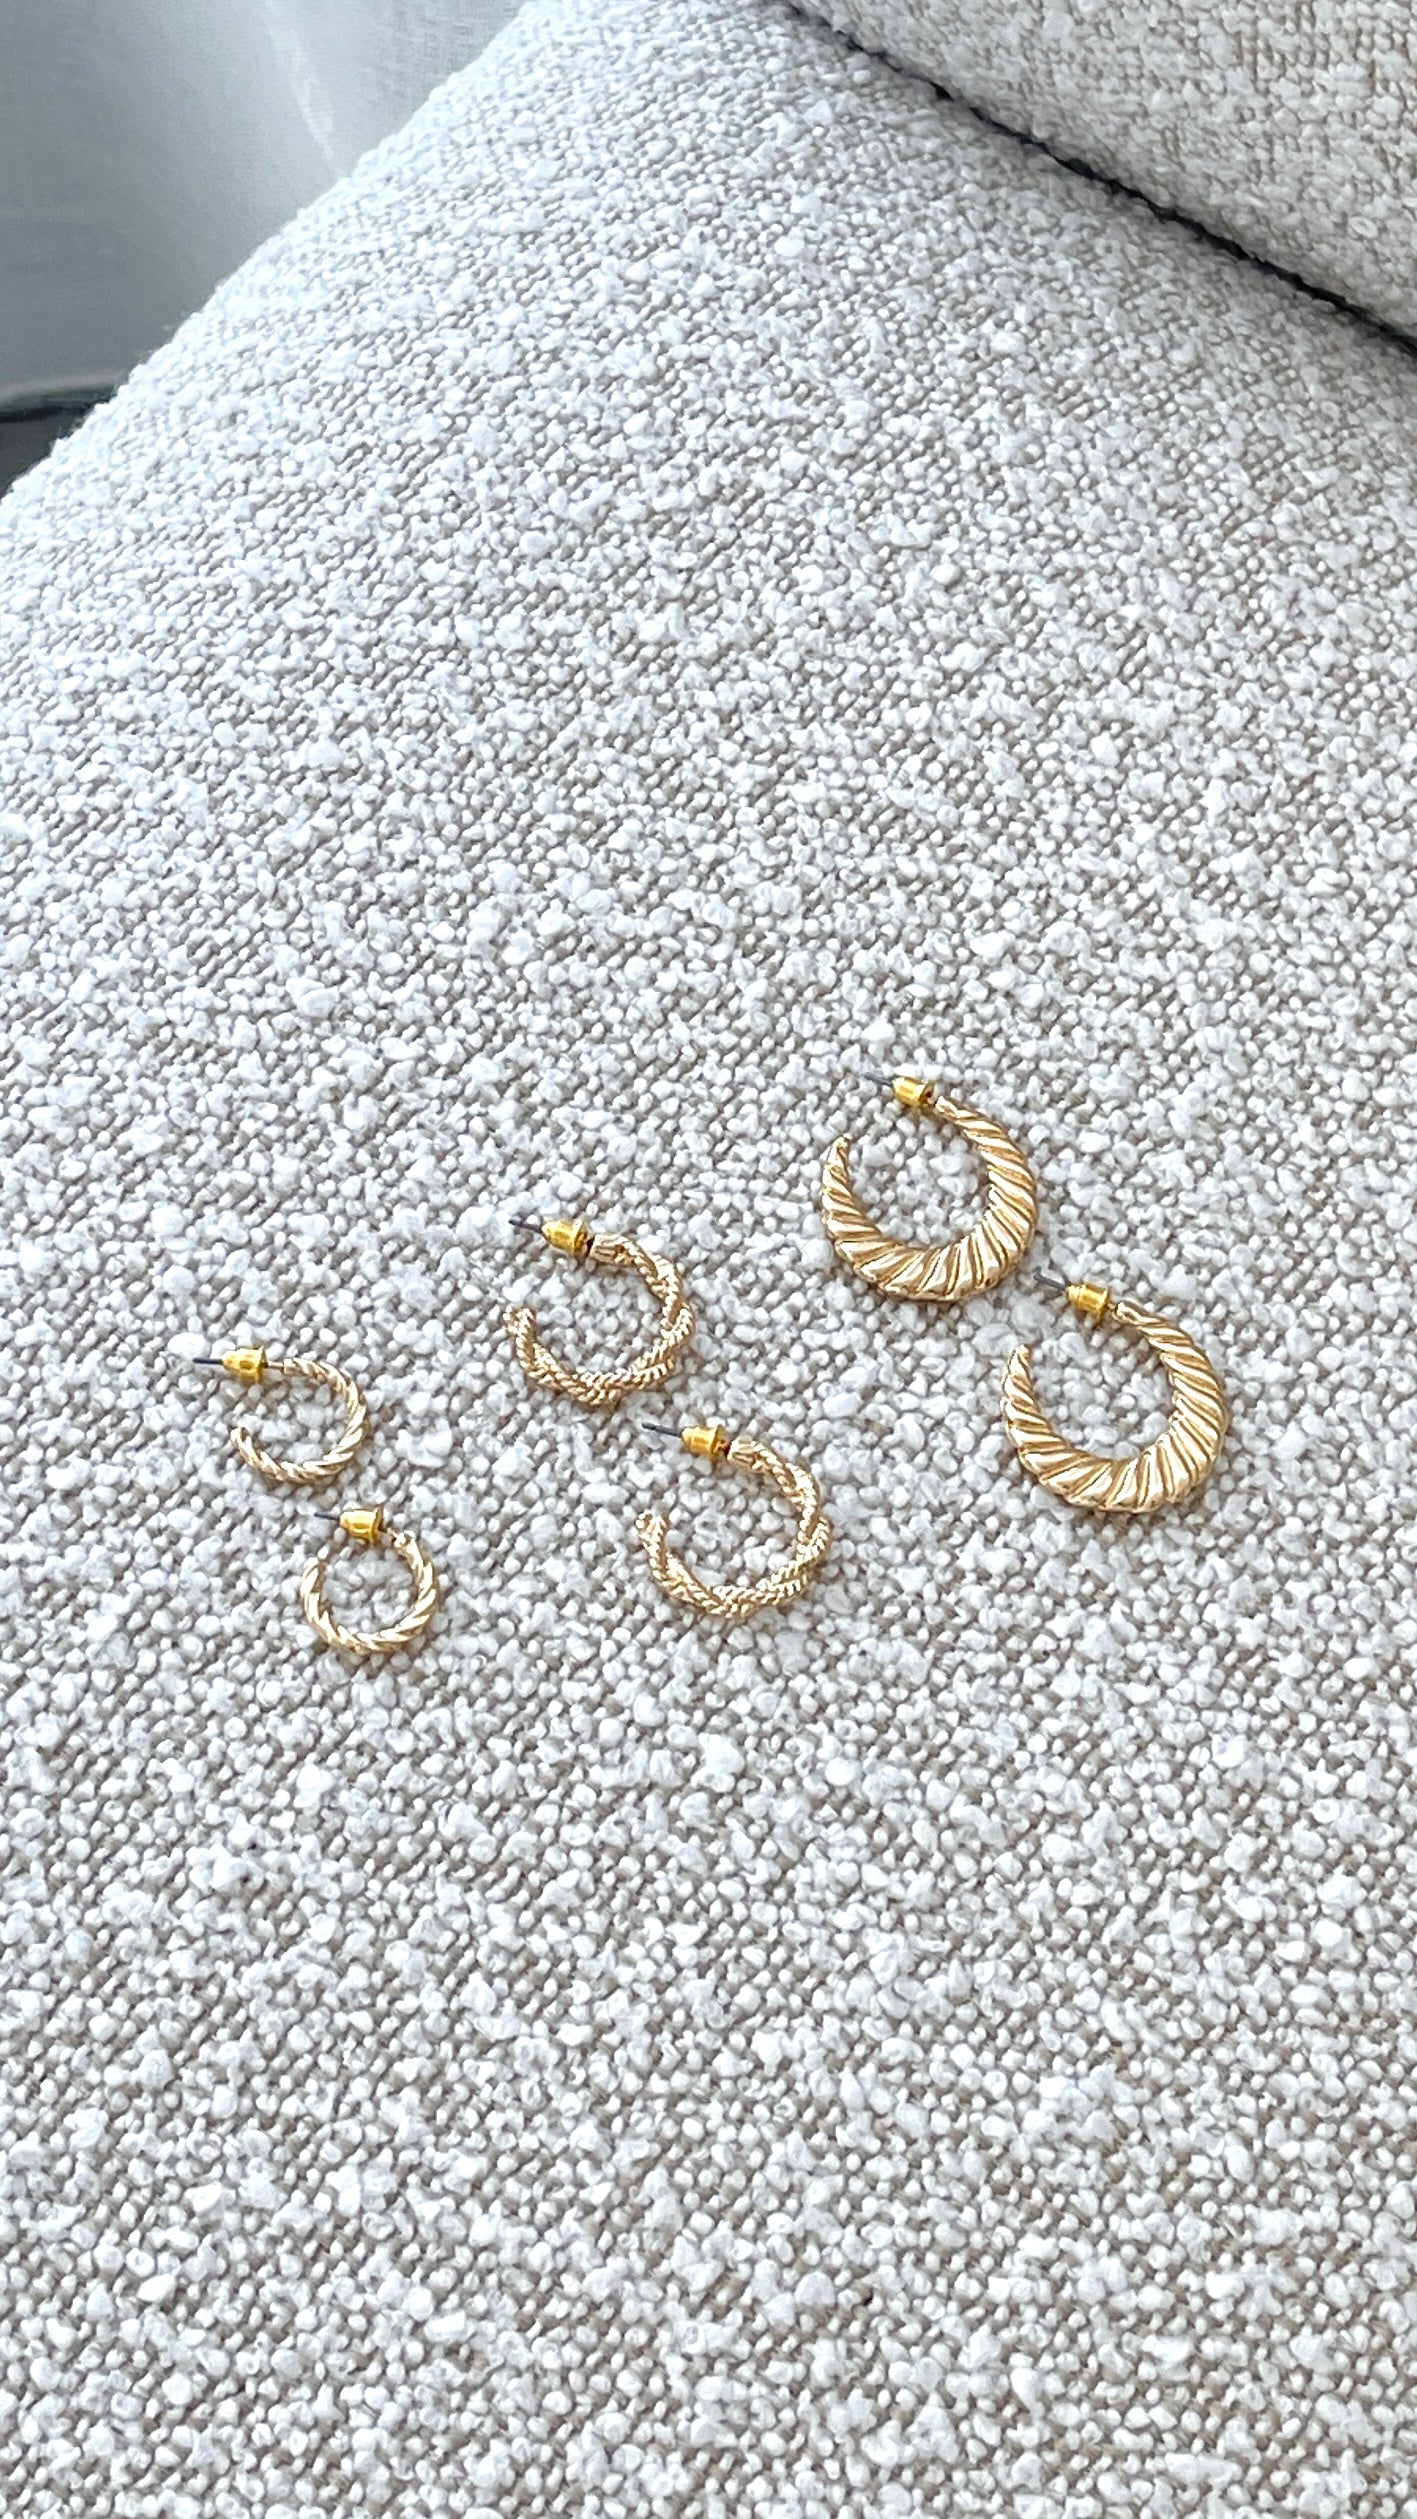 Reta Triple Pack Earrings - Gold